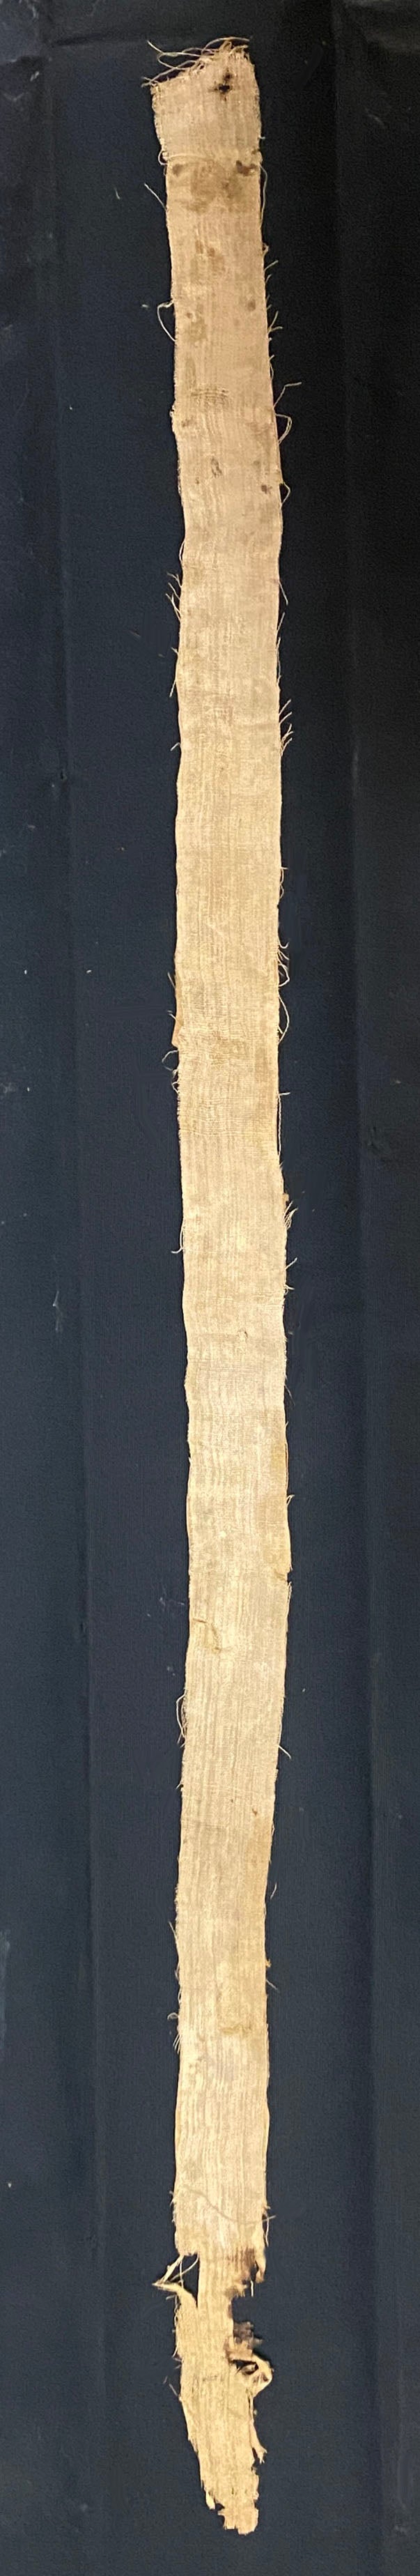 Egyptian Hieroglyphic Painted Linen Mummy Bandage